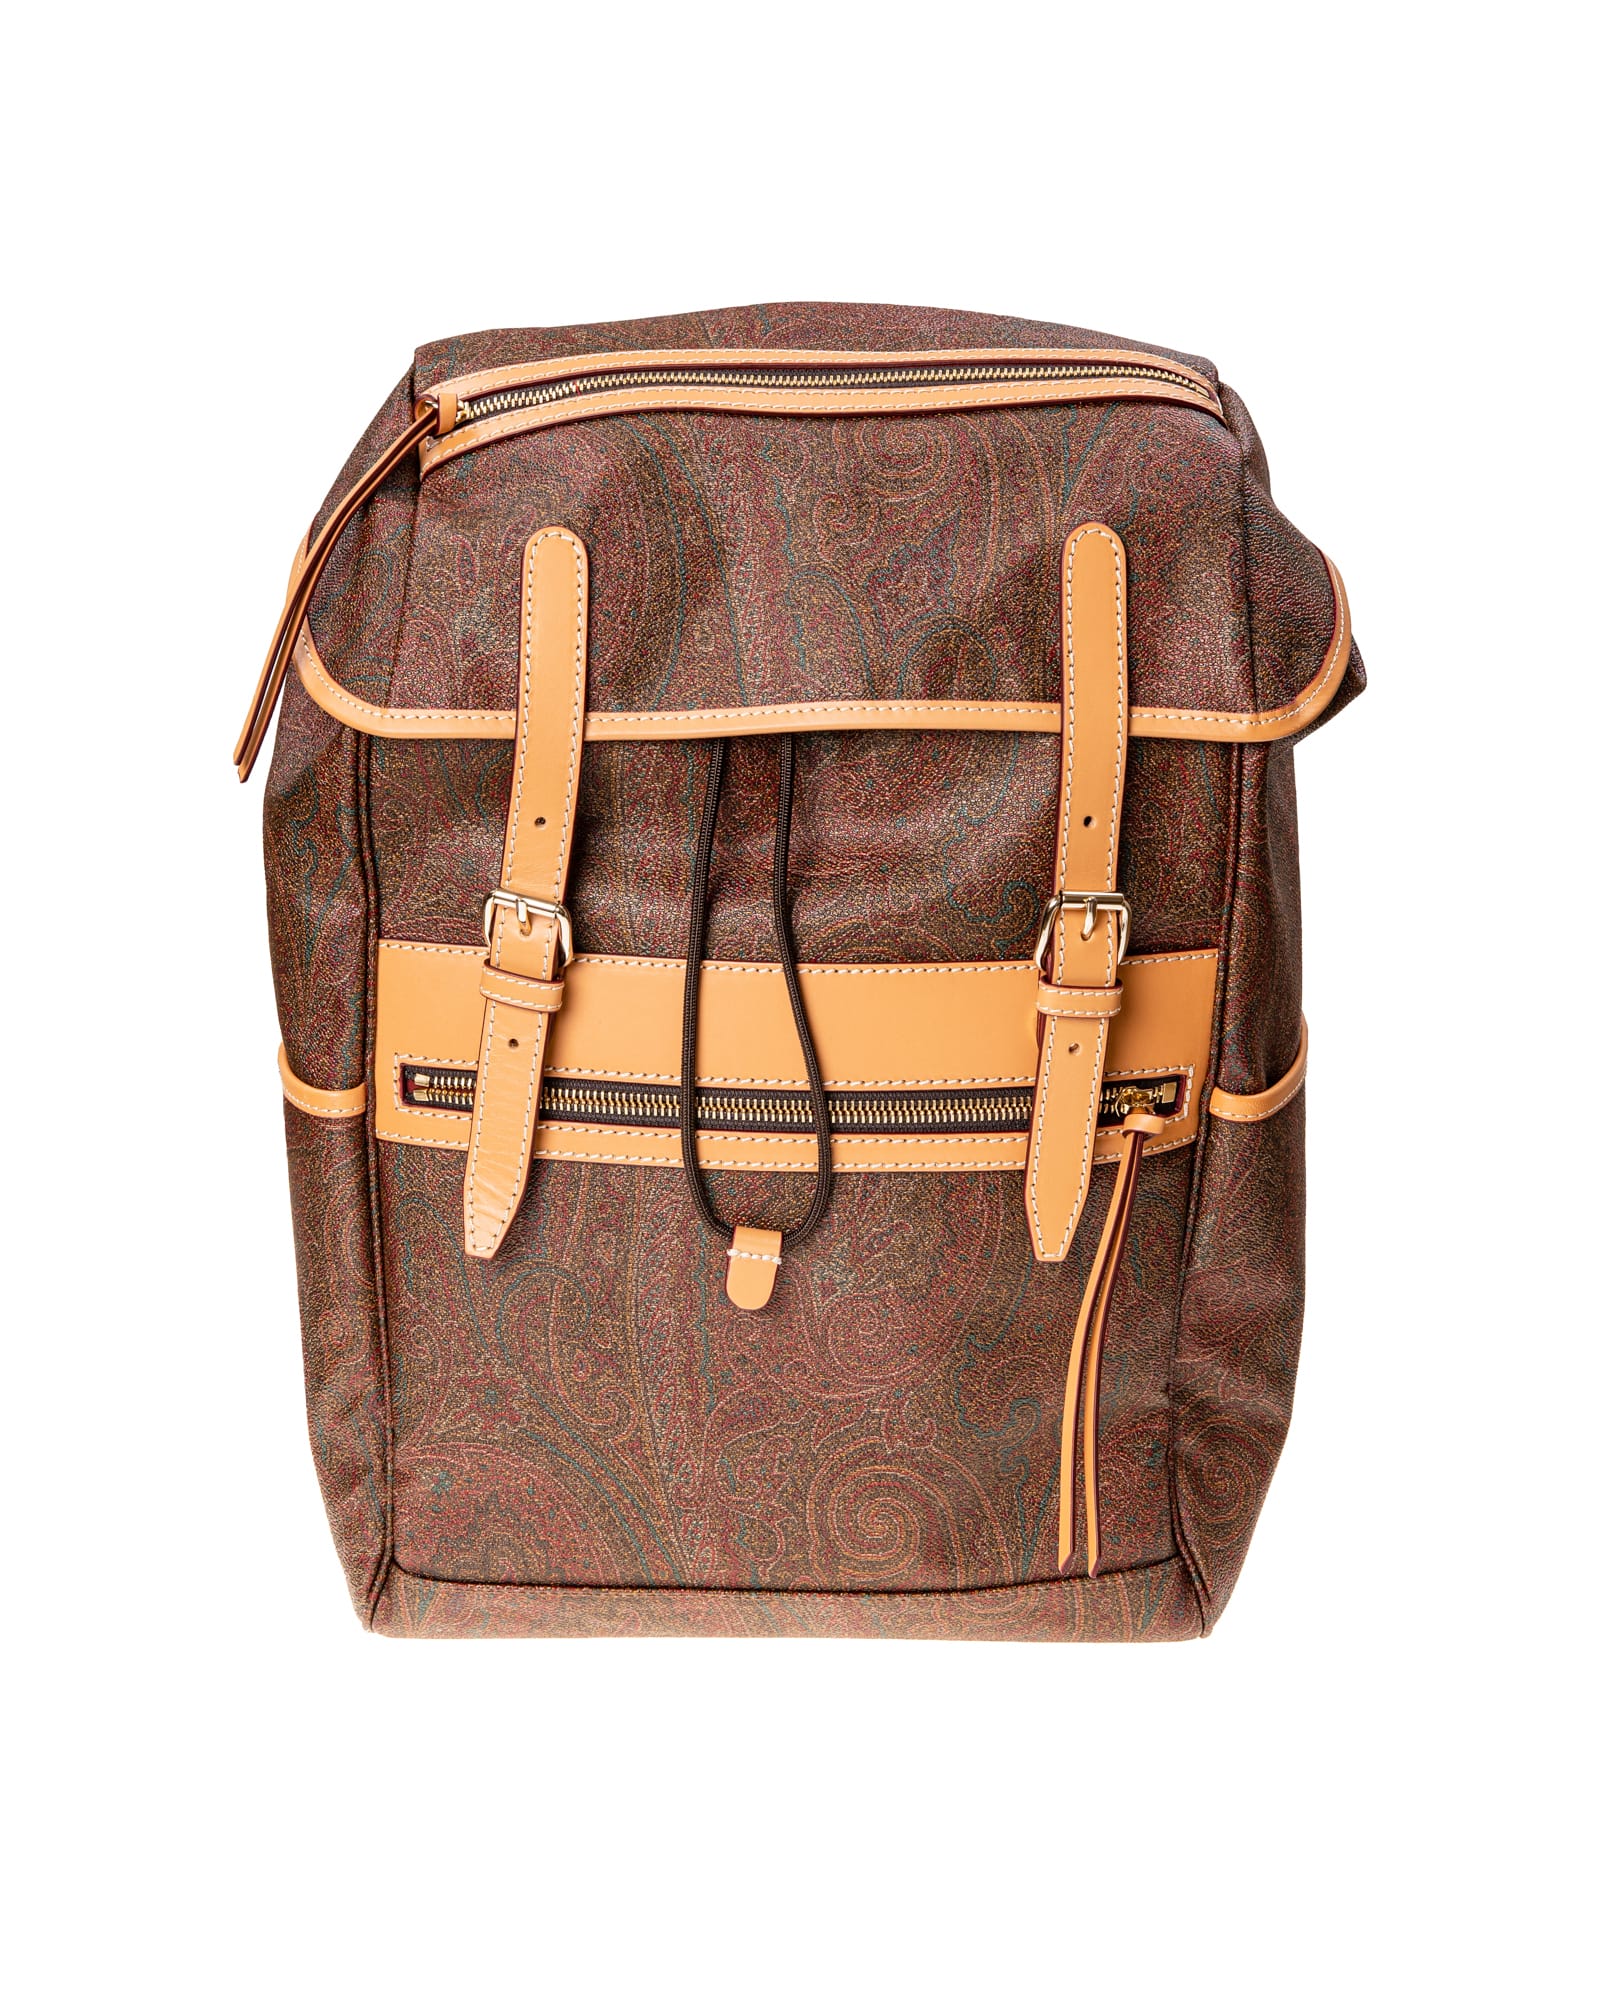 Etro Backpack made | Smart Closet